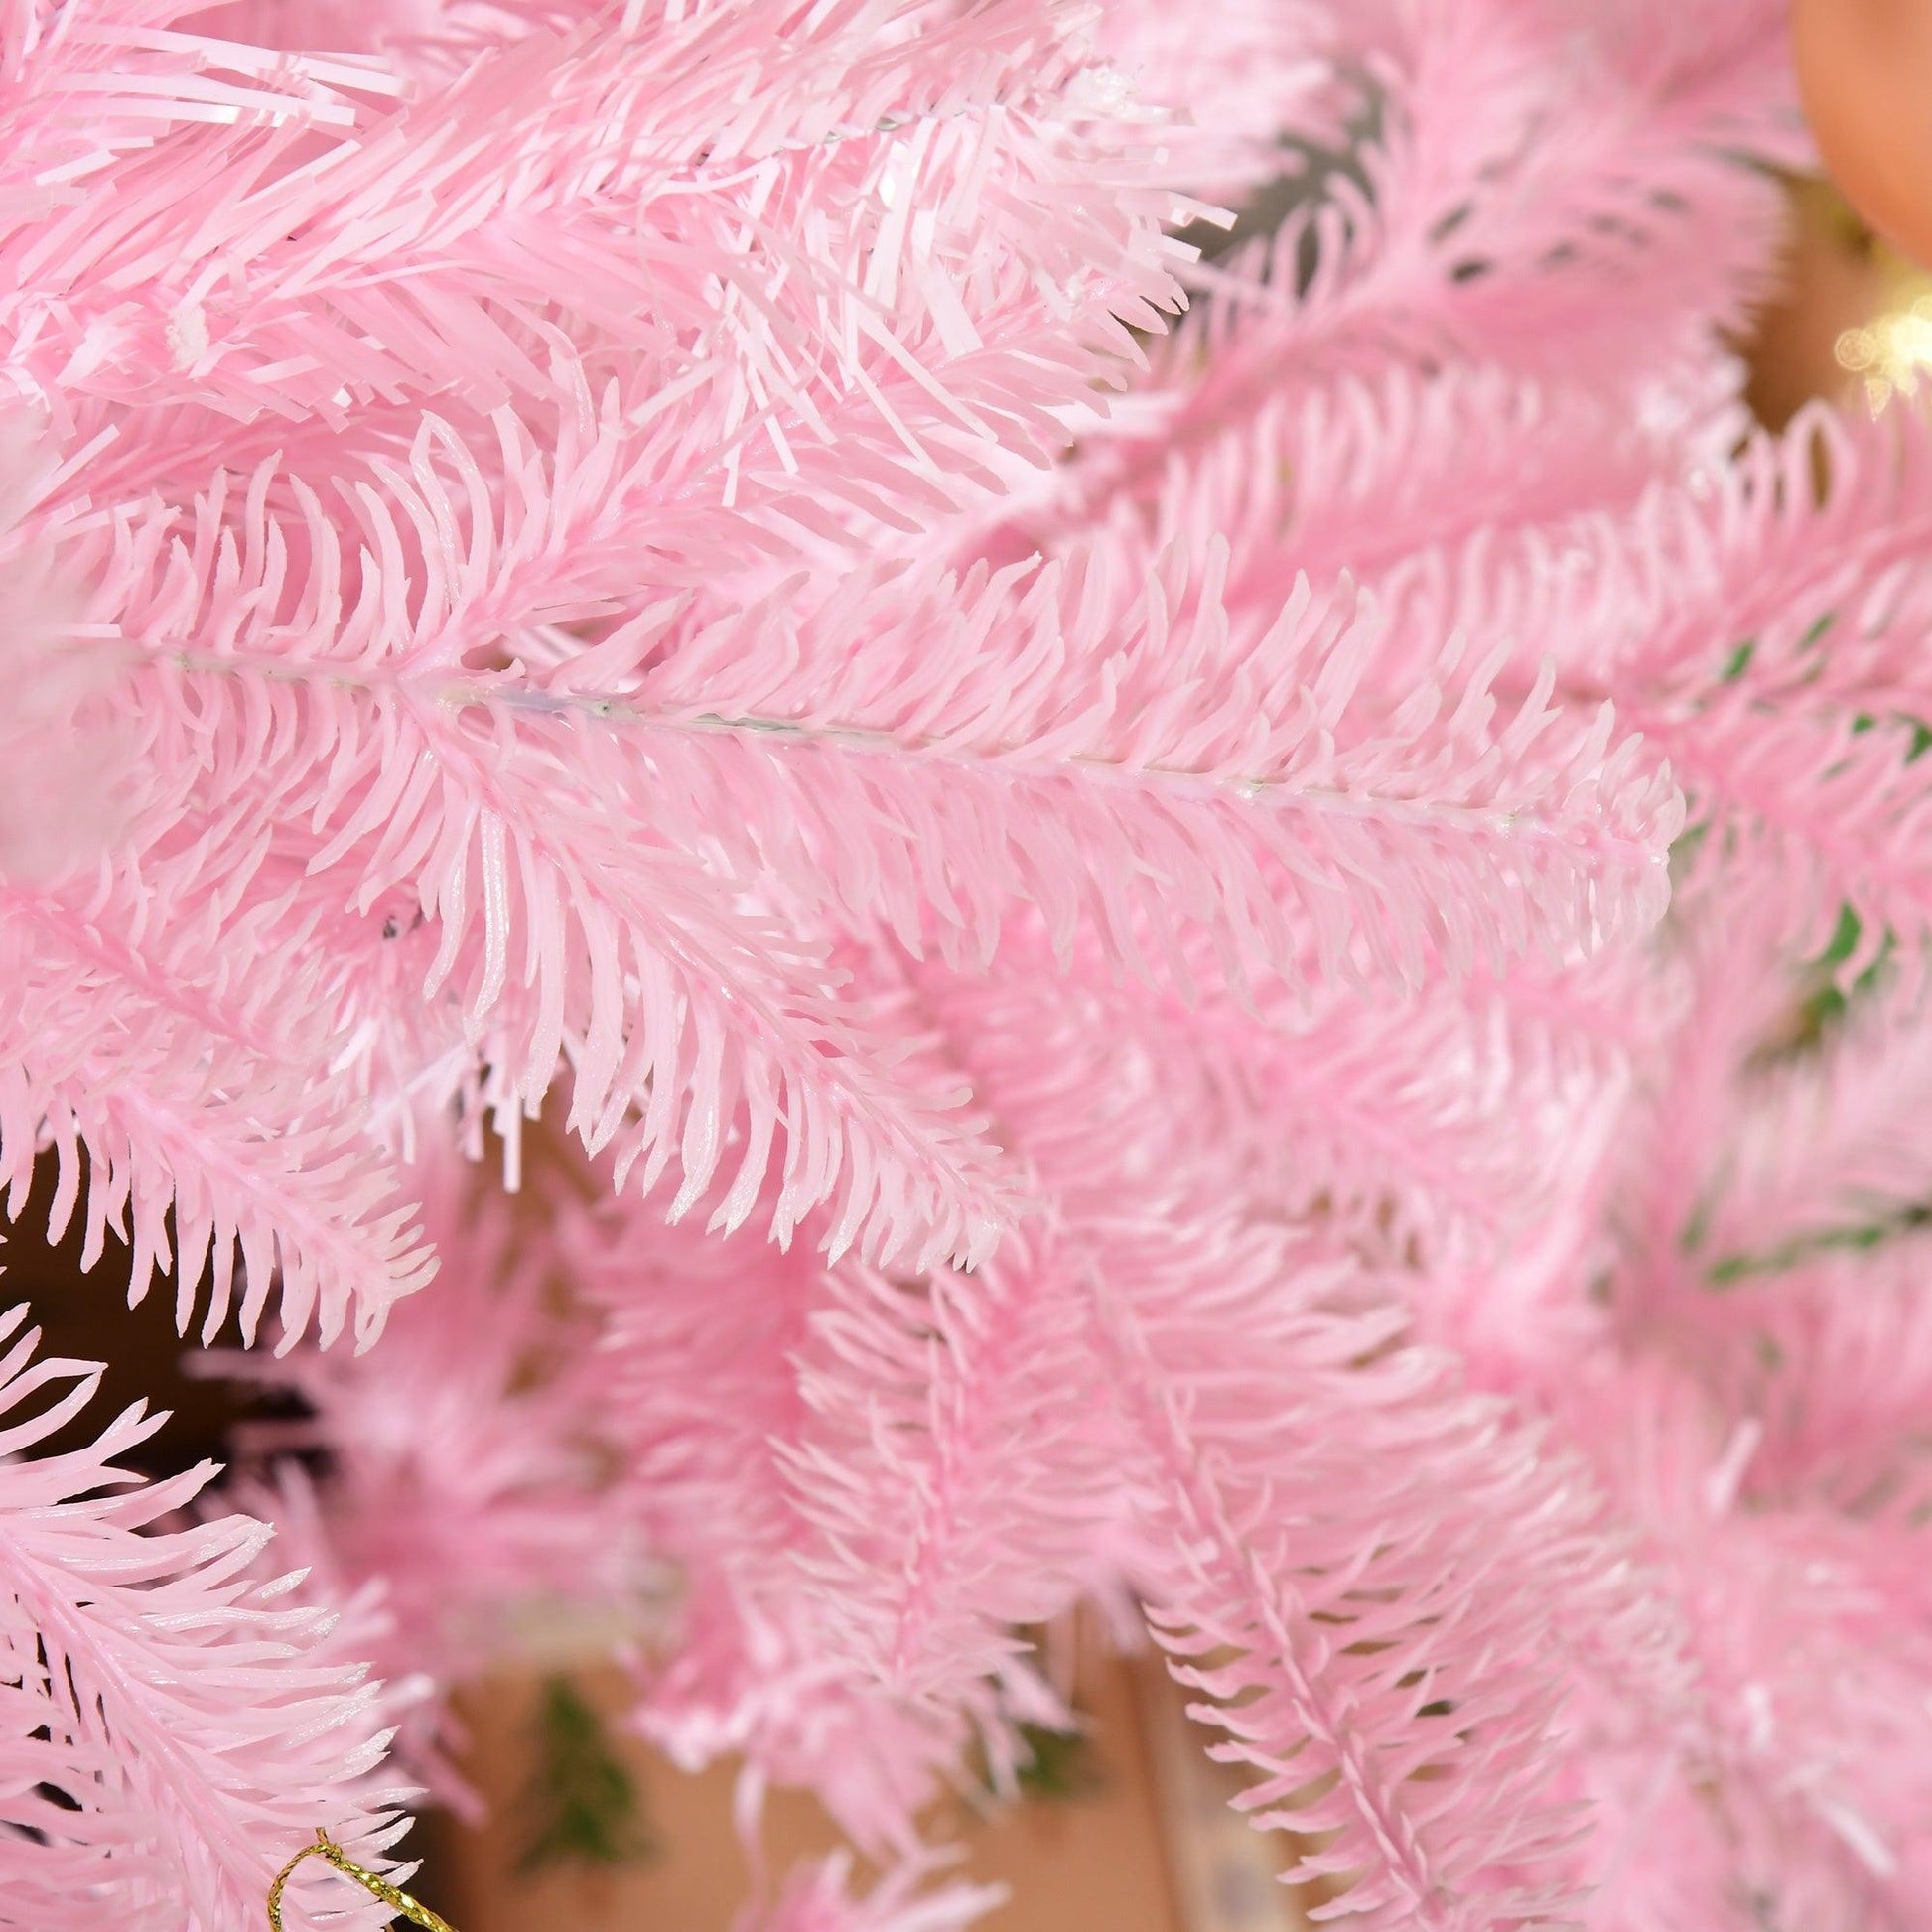 HOMCOM 5FT Pink Pop-up Xmas Tree: Perfect Holiday Decoration - ALL4U RETAILER LTD